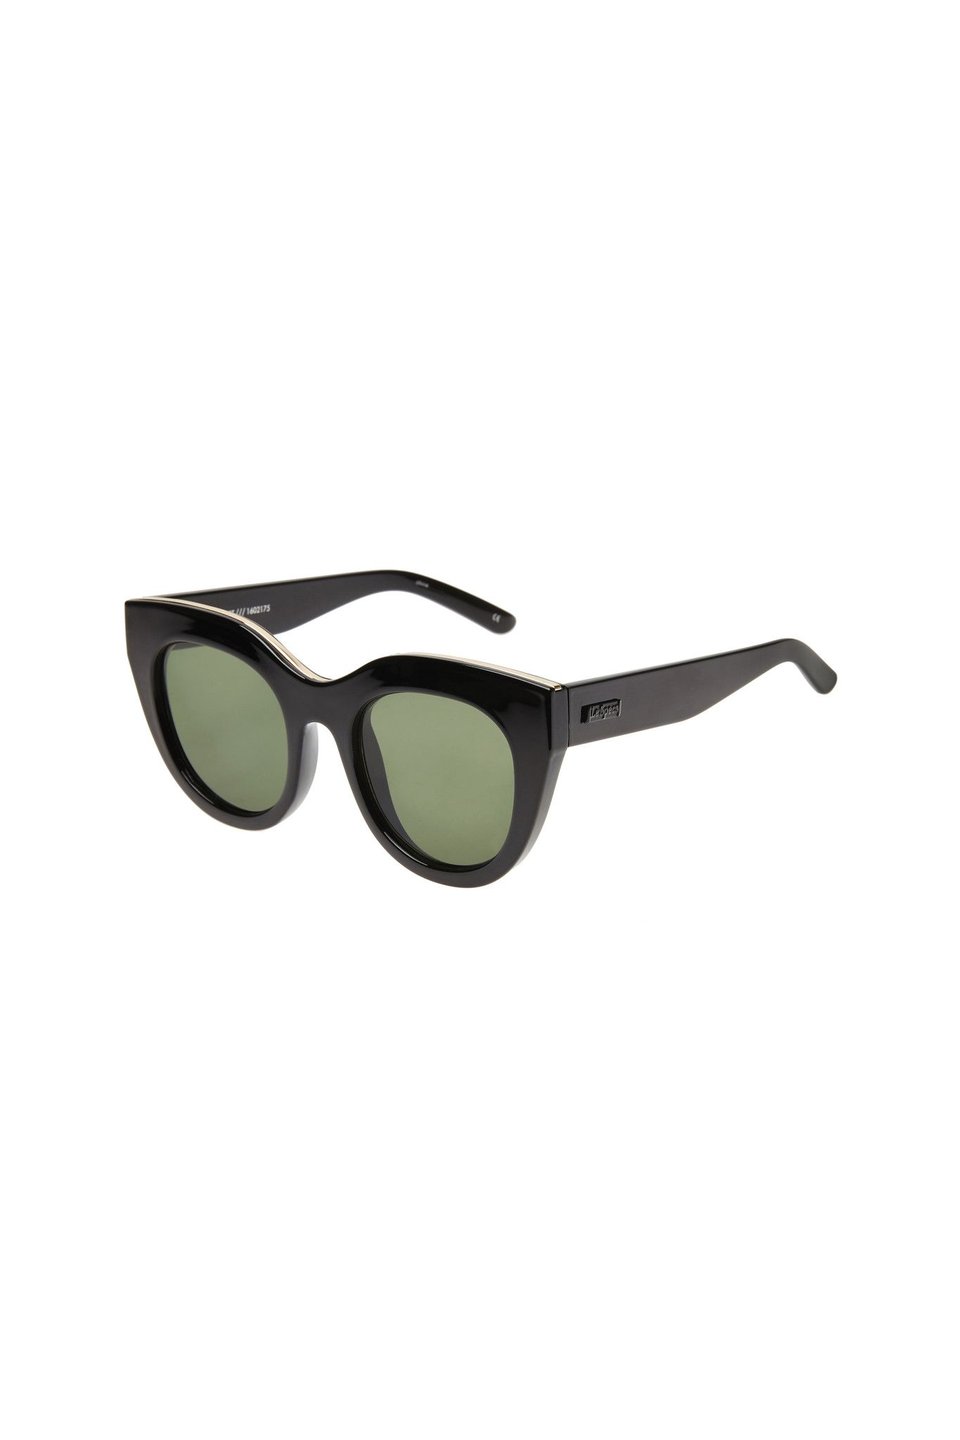 Le Specs Air Heart Sunglasses - Black